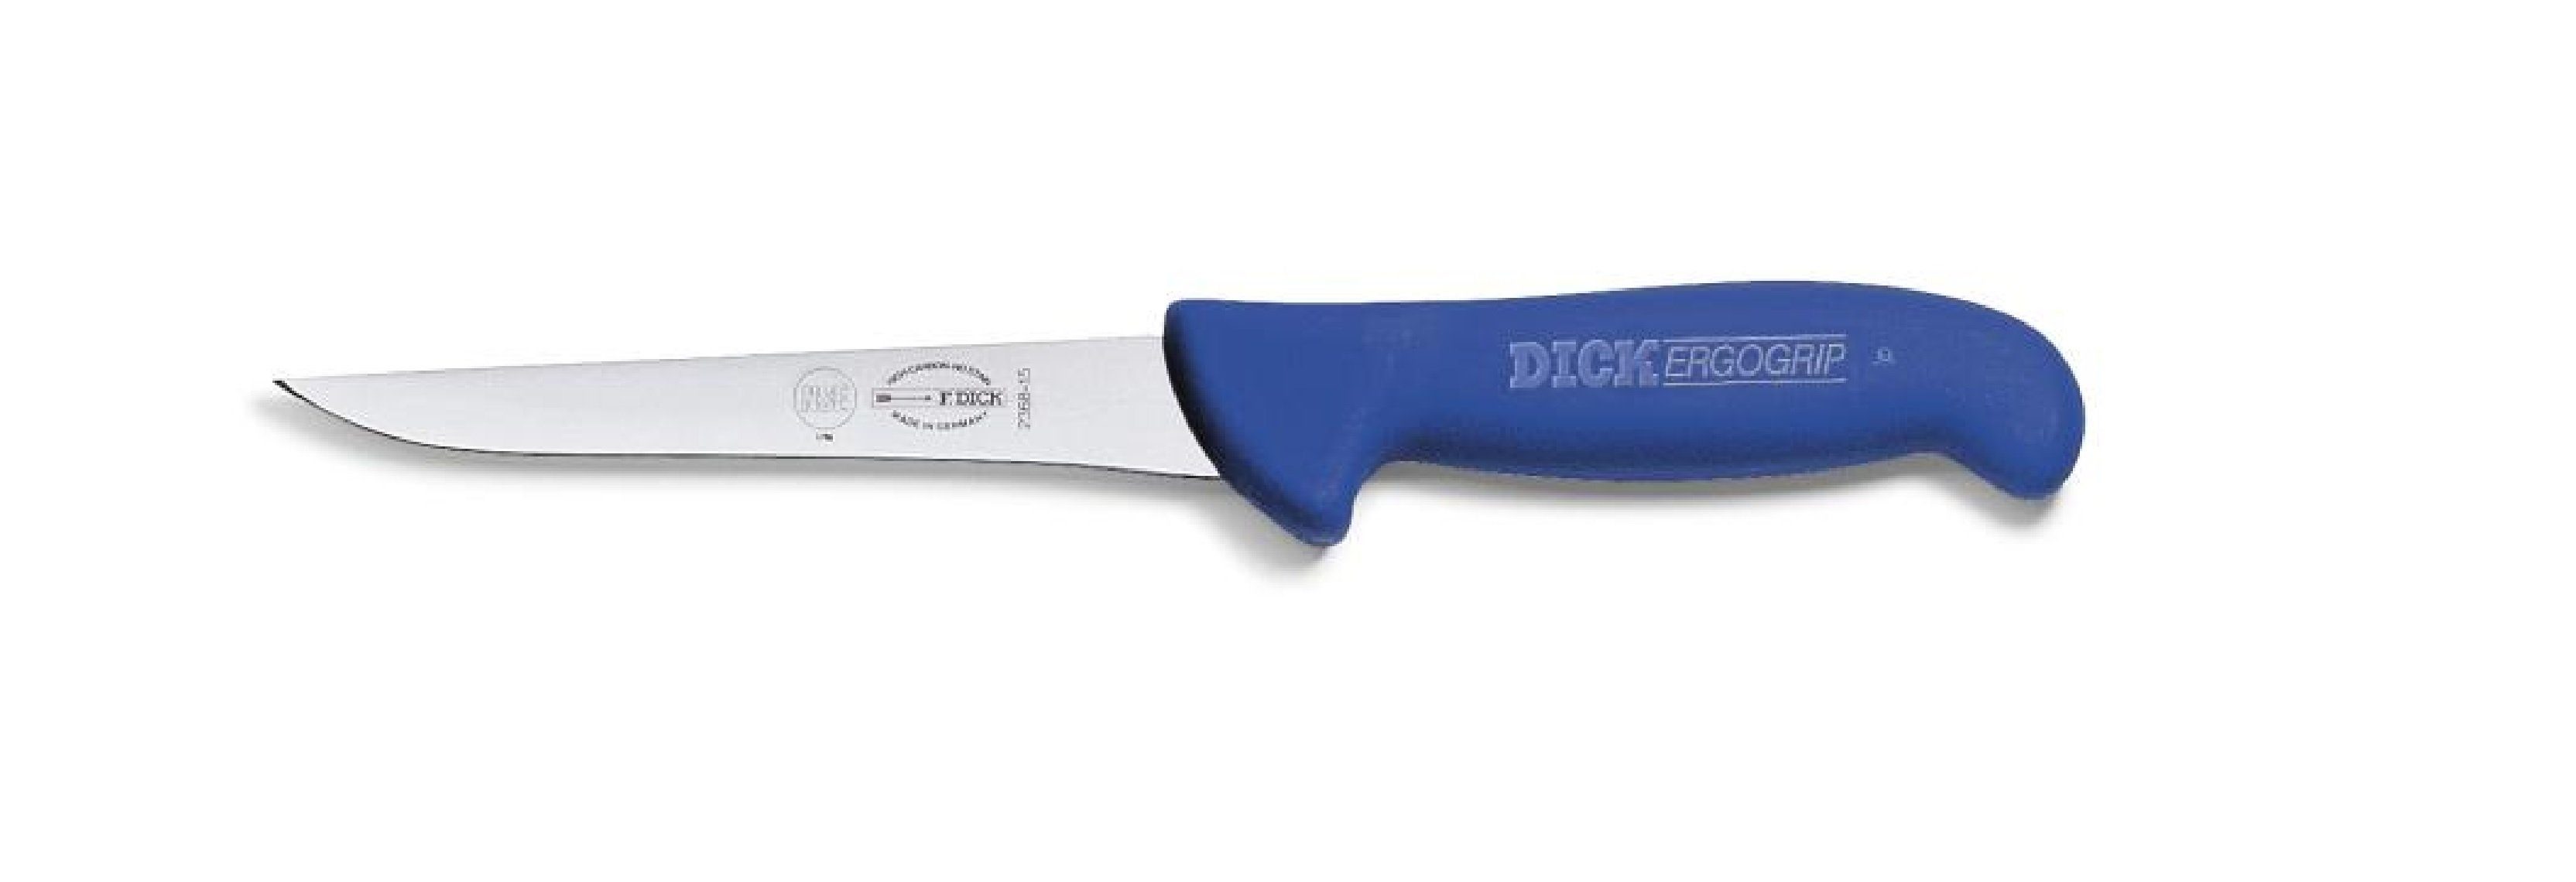 Dick Ausbeinmesser Ergogrip 15 8236815 Ausbeinmesser Klinge Messer schmale cm Dick